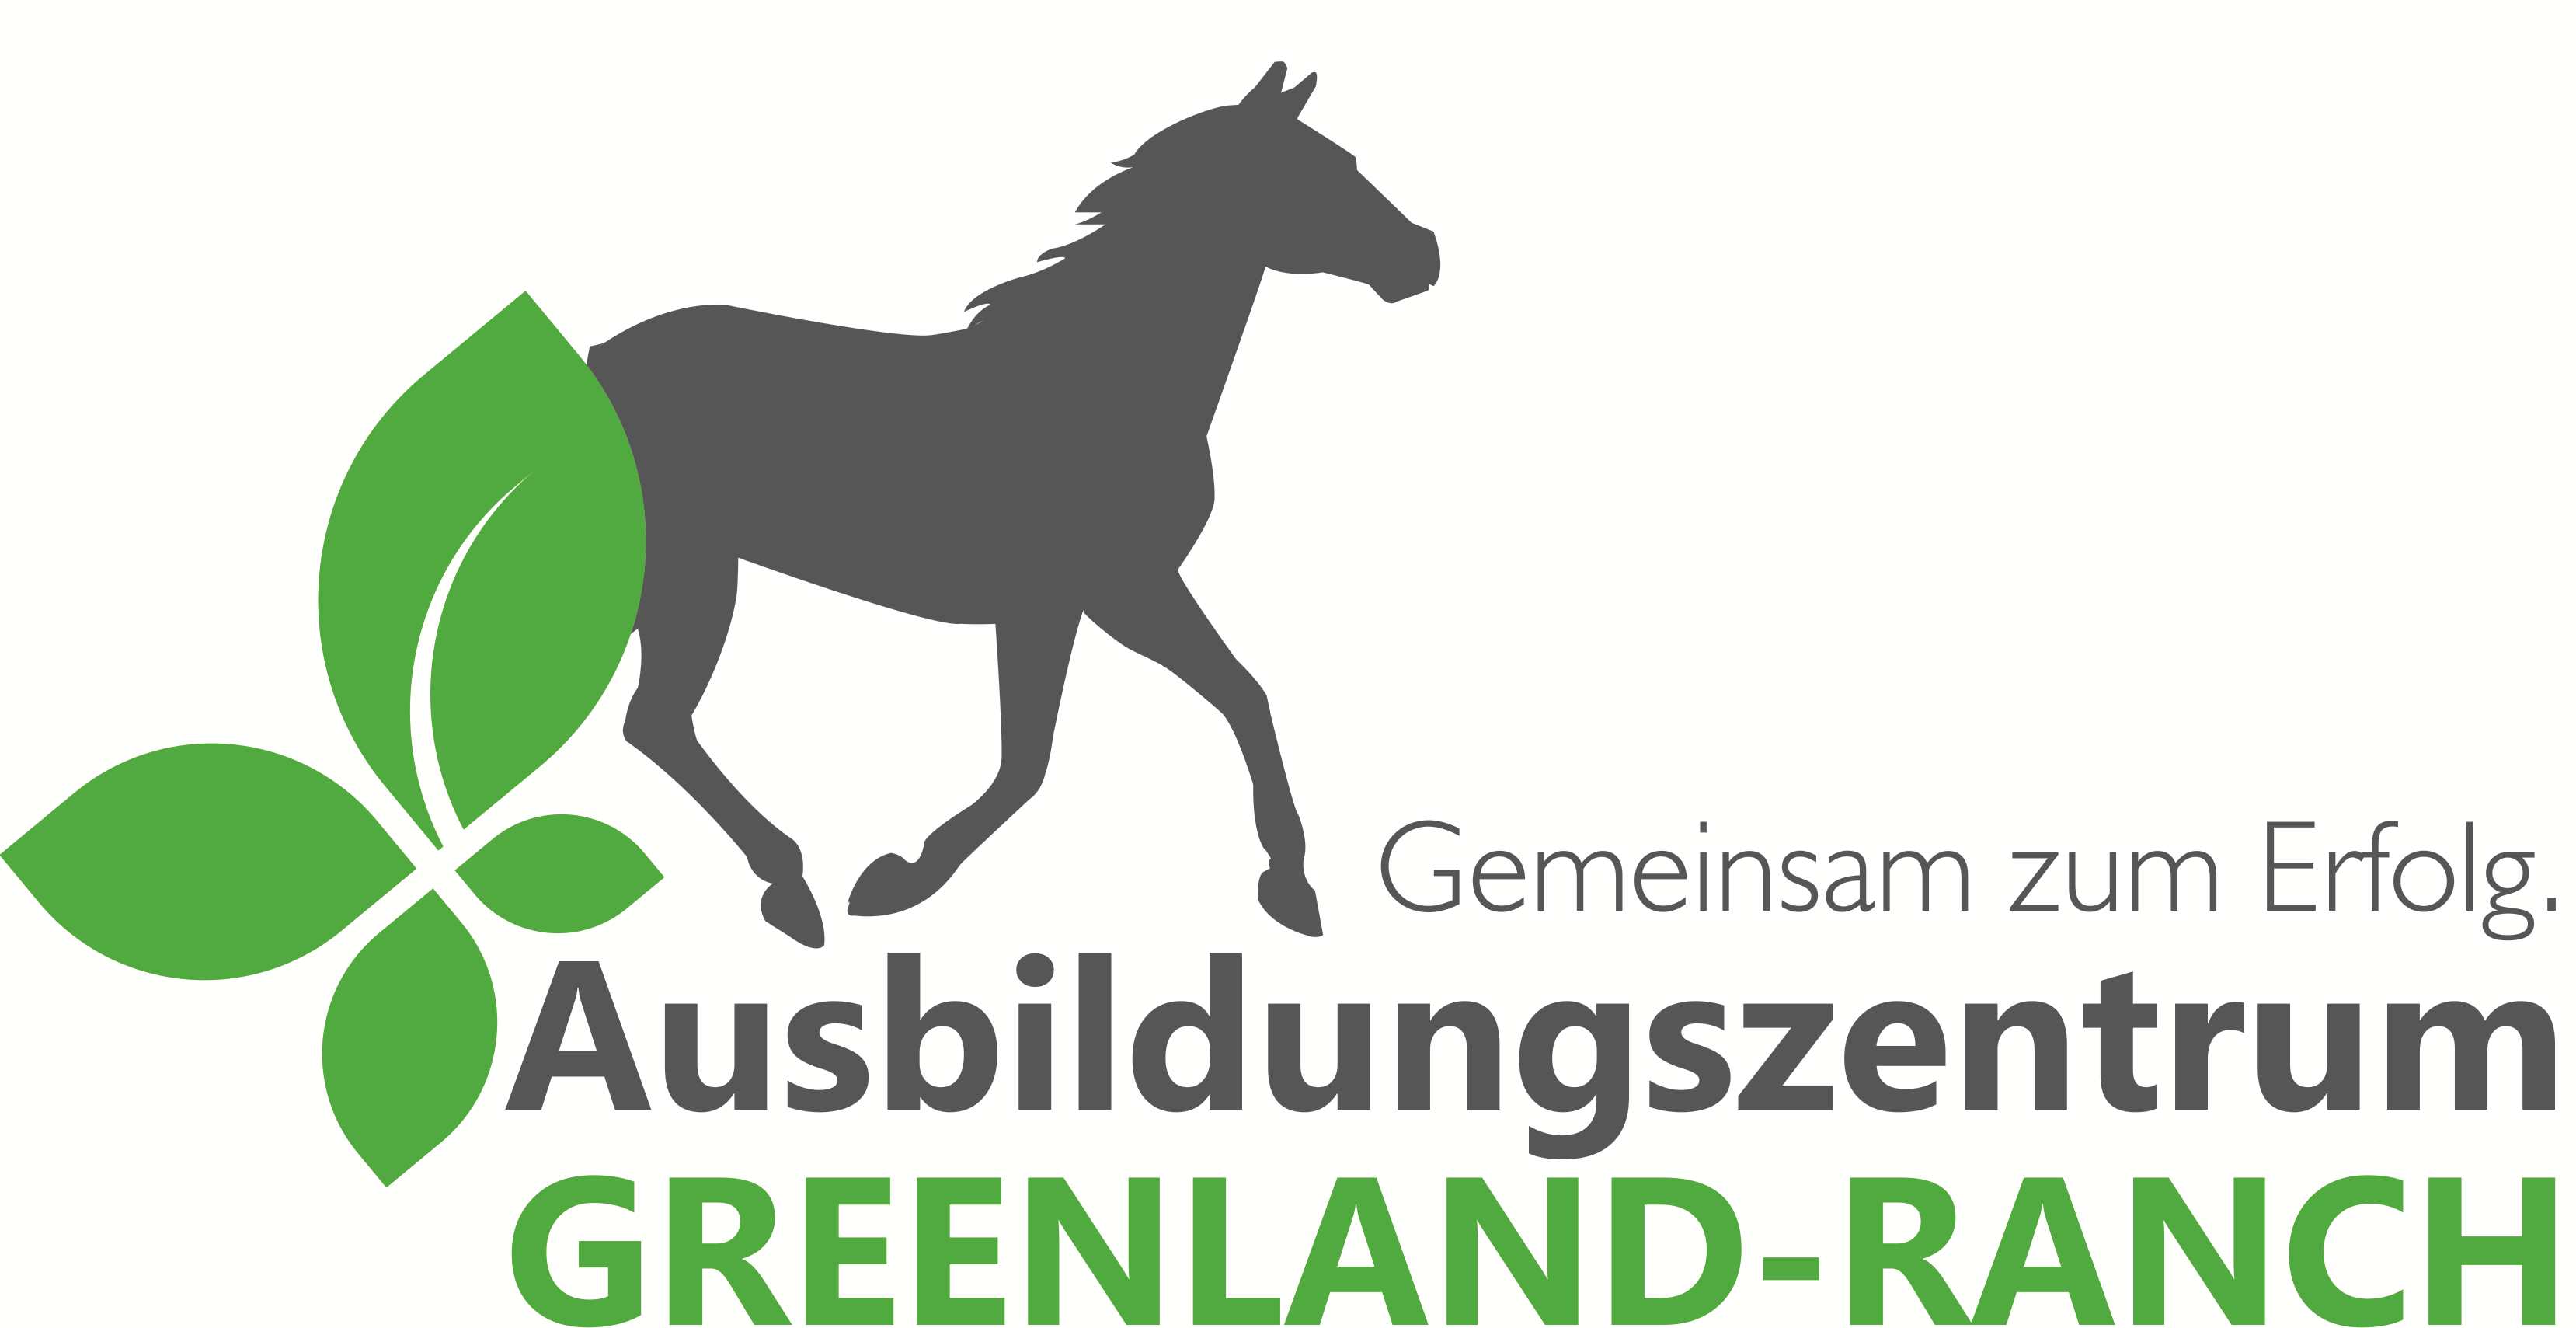 (c) Ausbildungszentrum-greenland-ranch.de